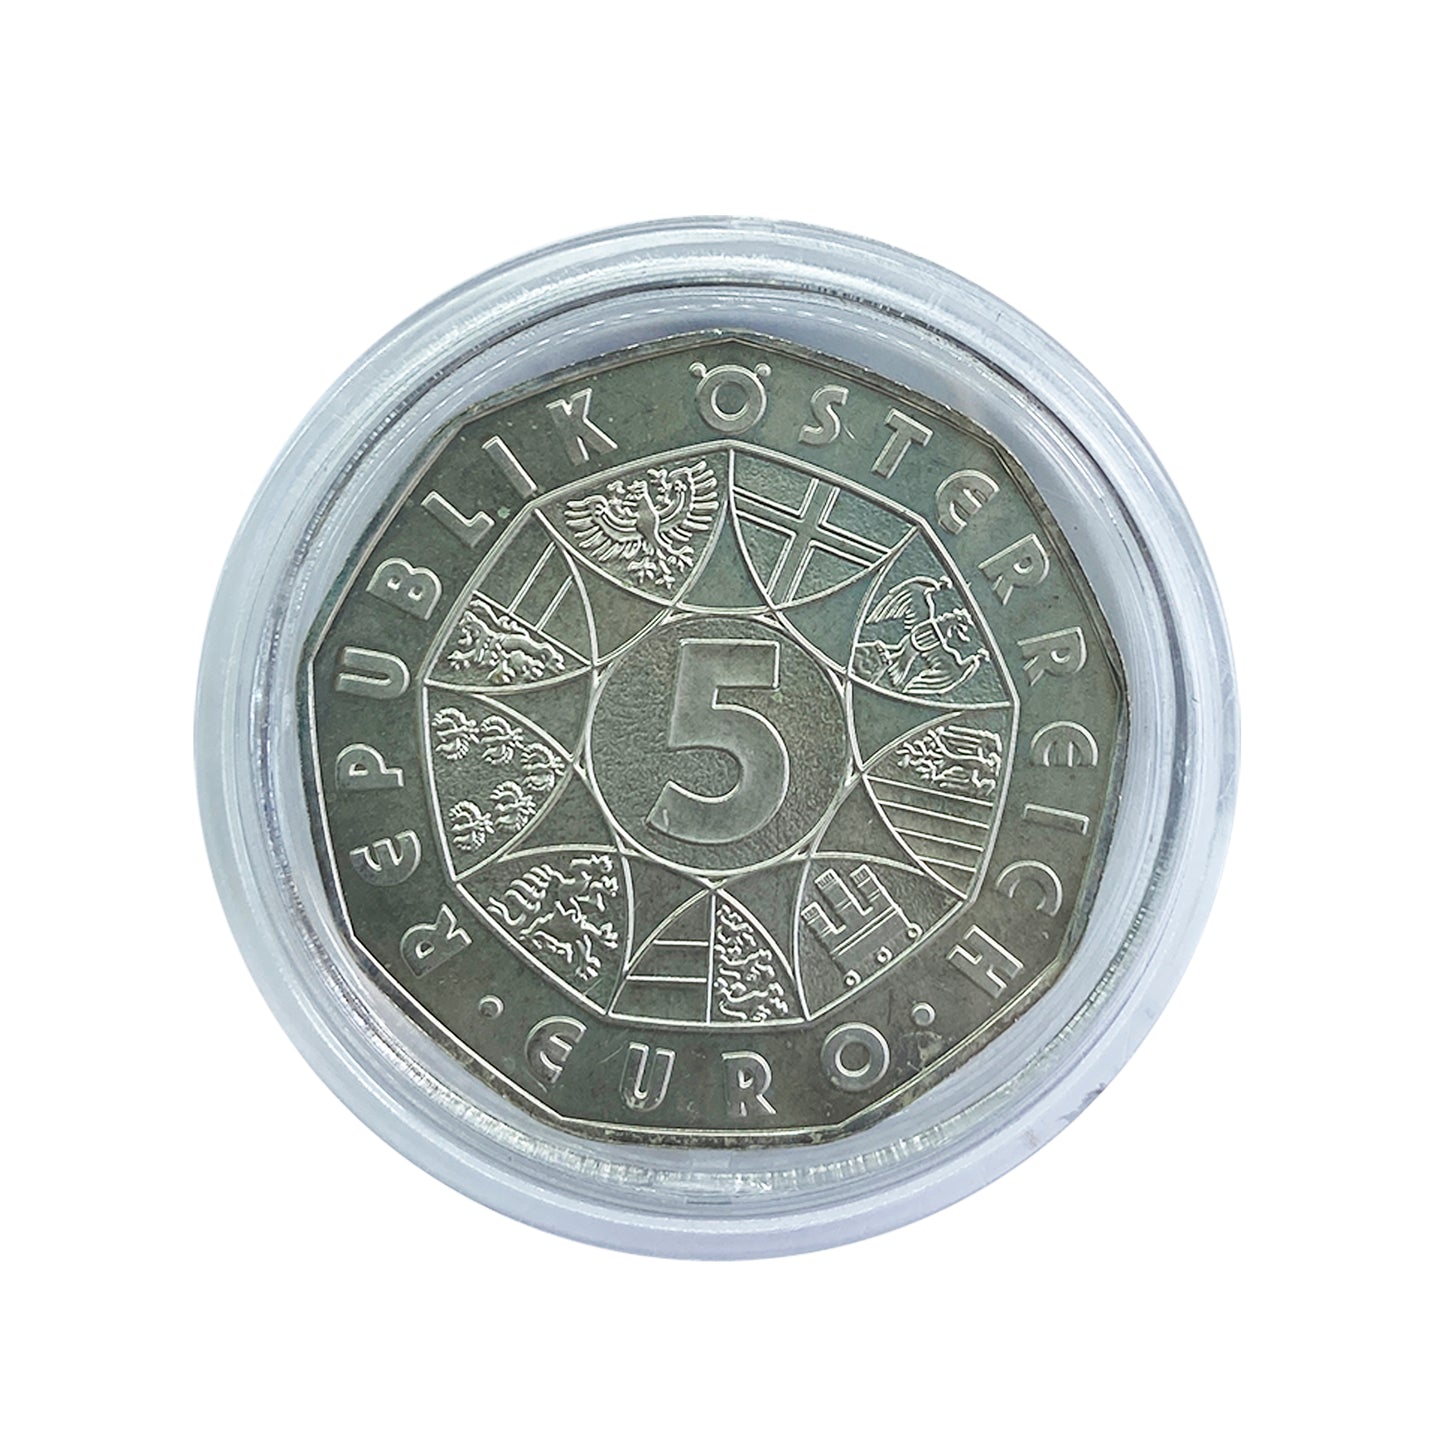 Austria - Moneda 5 euros plata 2007 - 850 Aniversario de Mariazell